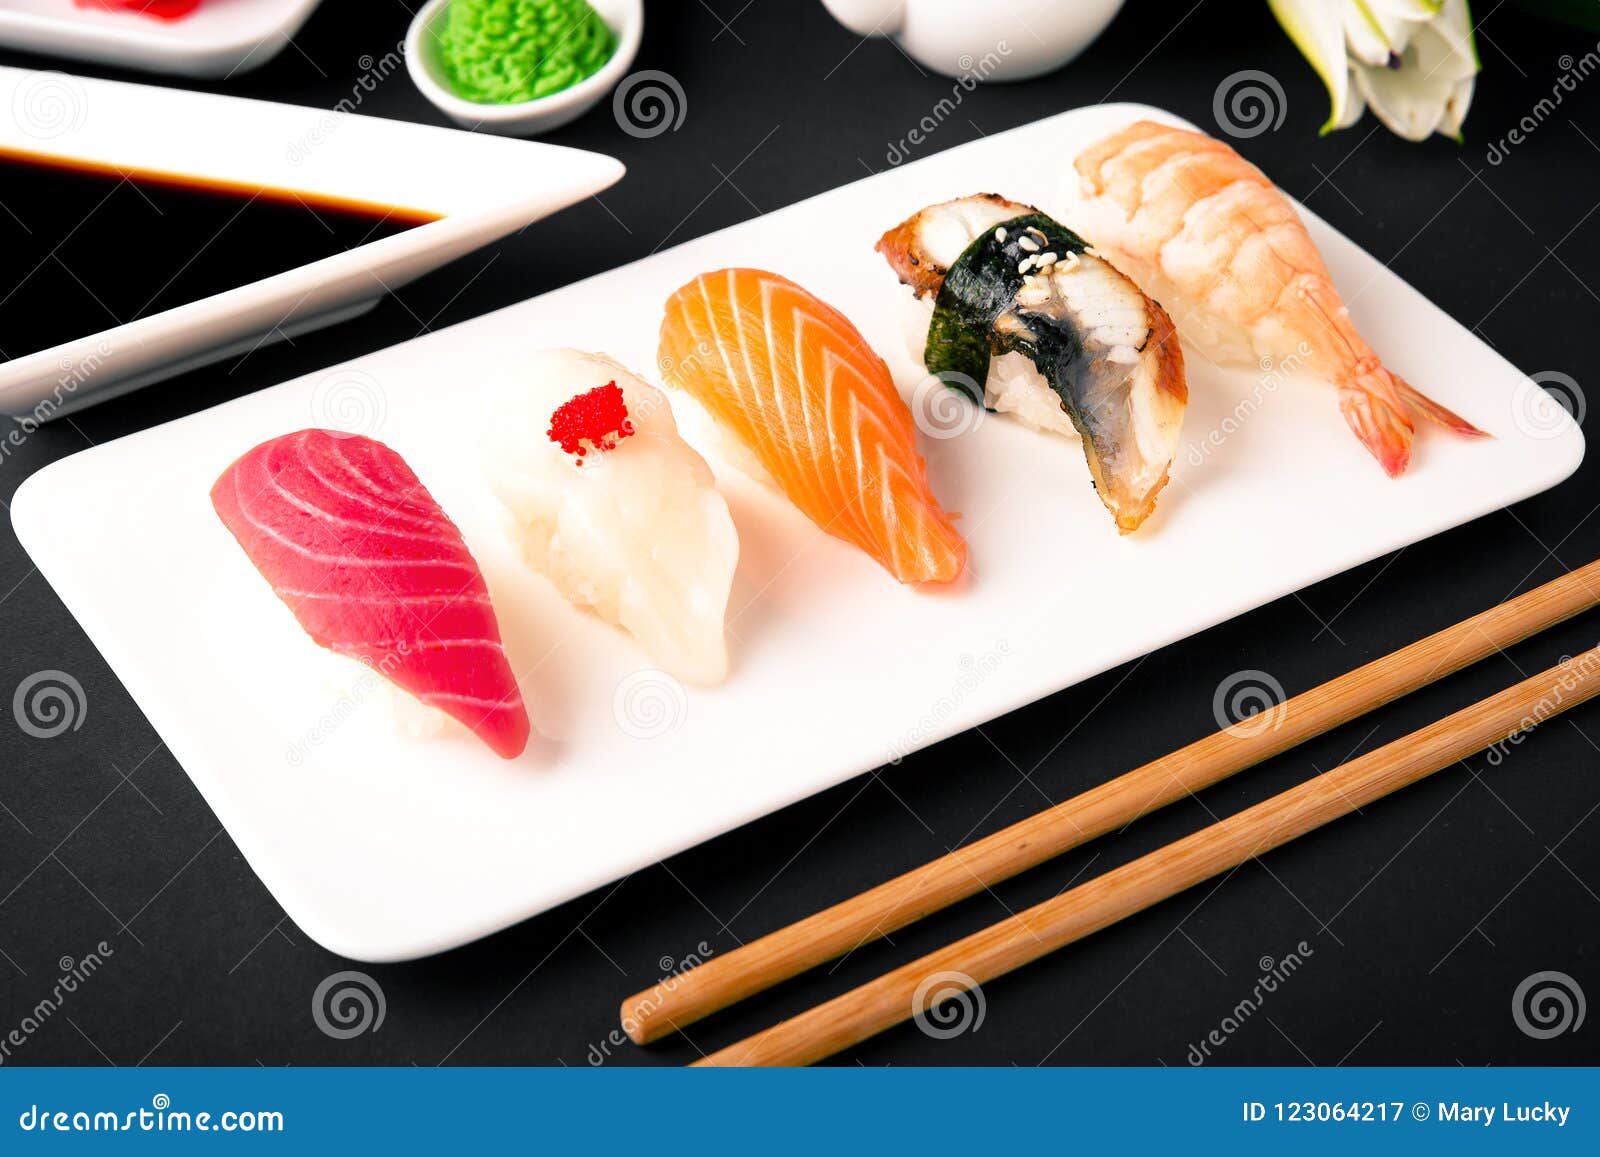 https://thumbs.dreamstime.com/z/nigiri-salmon-tuna-perch-eel-scallop-caviar-shrimp-sharp-gunkan-sushi-set-nigiri-salmon-tuna-perch-eel-scallop-caviar-123064217.jpg